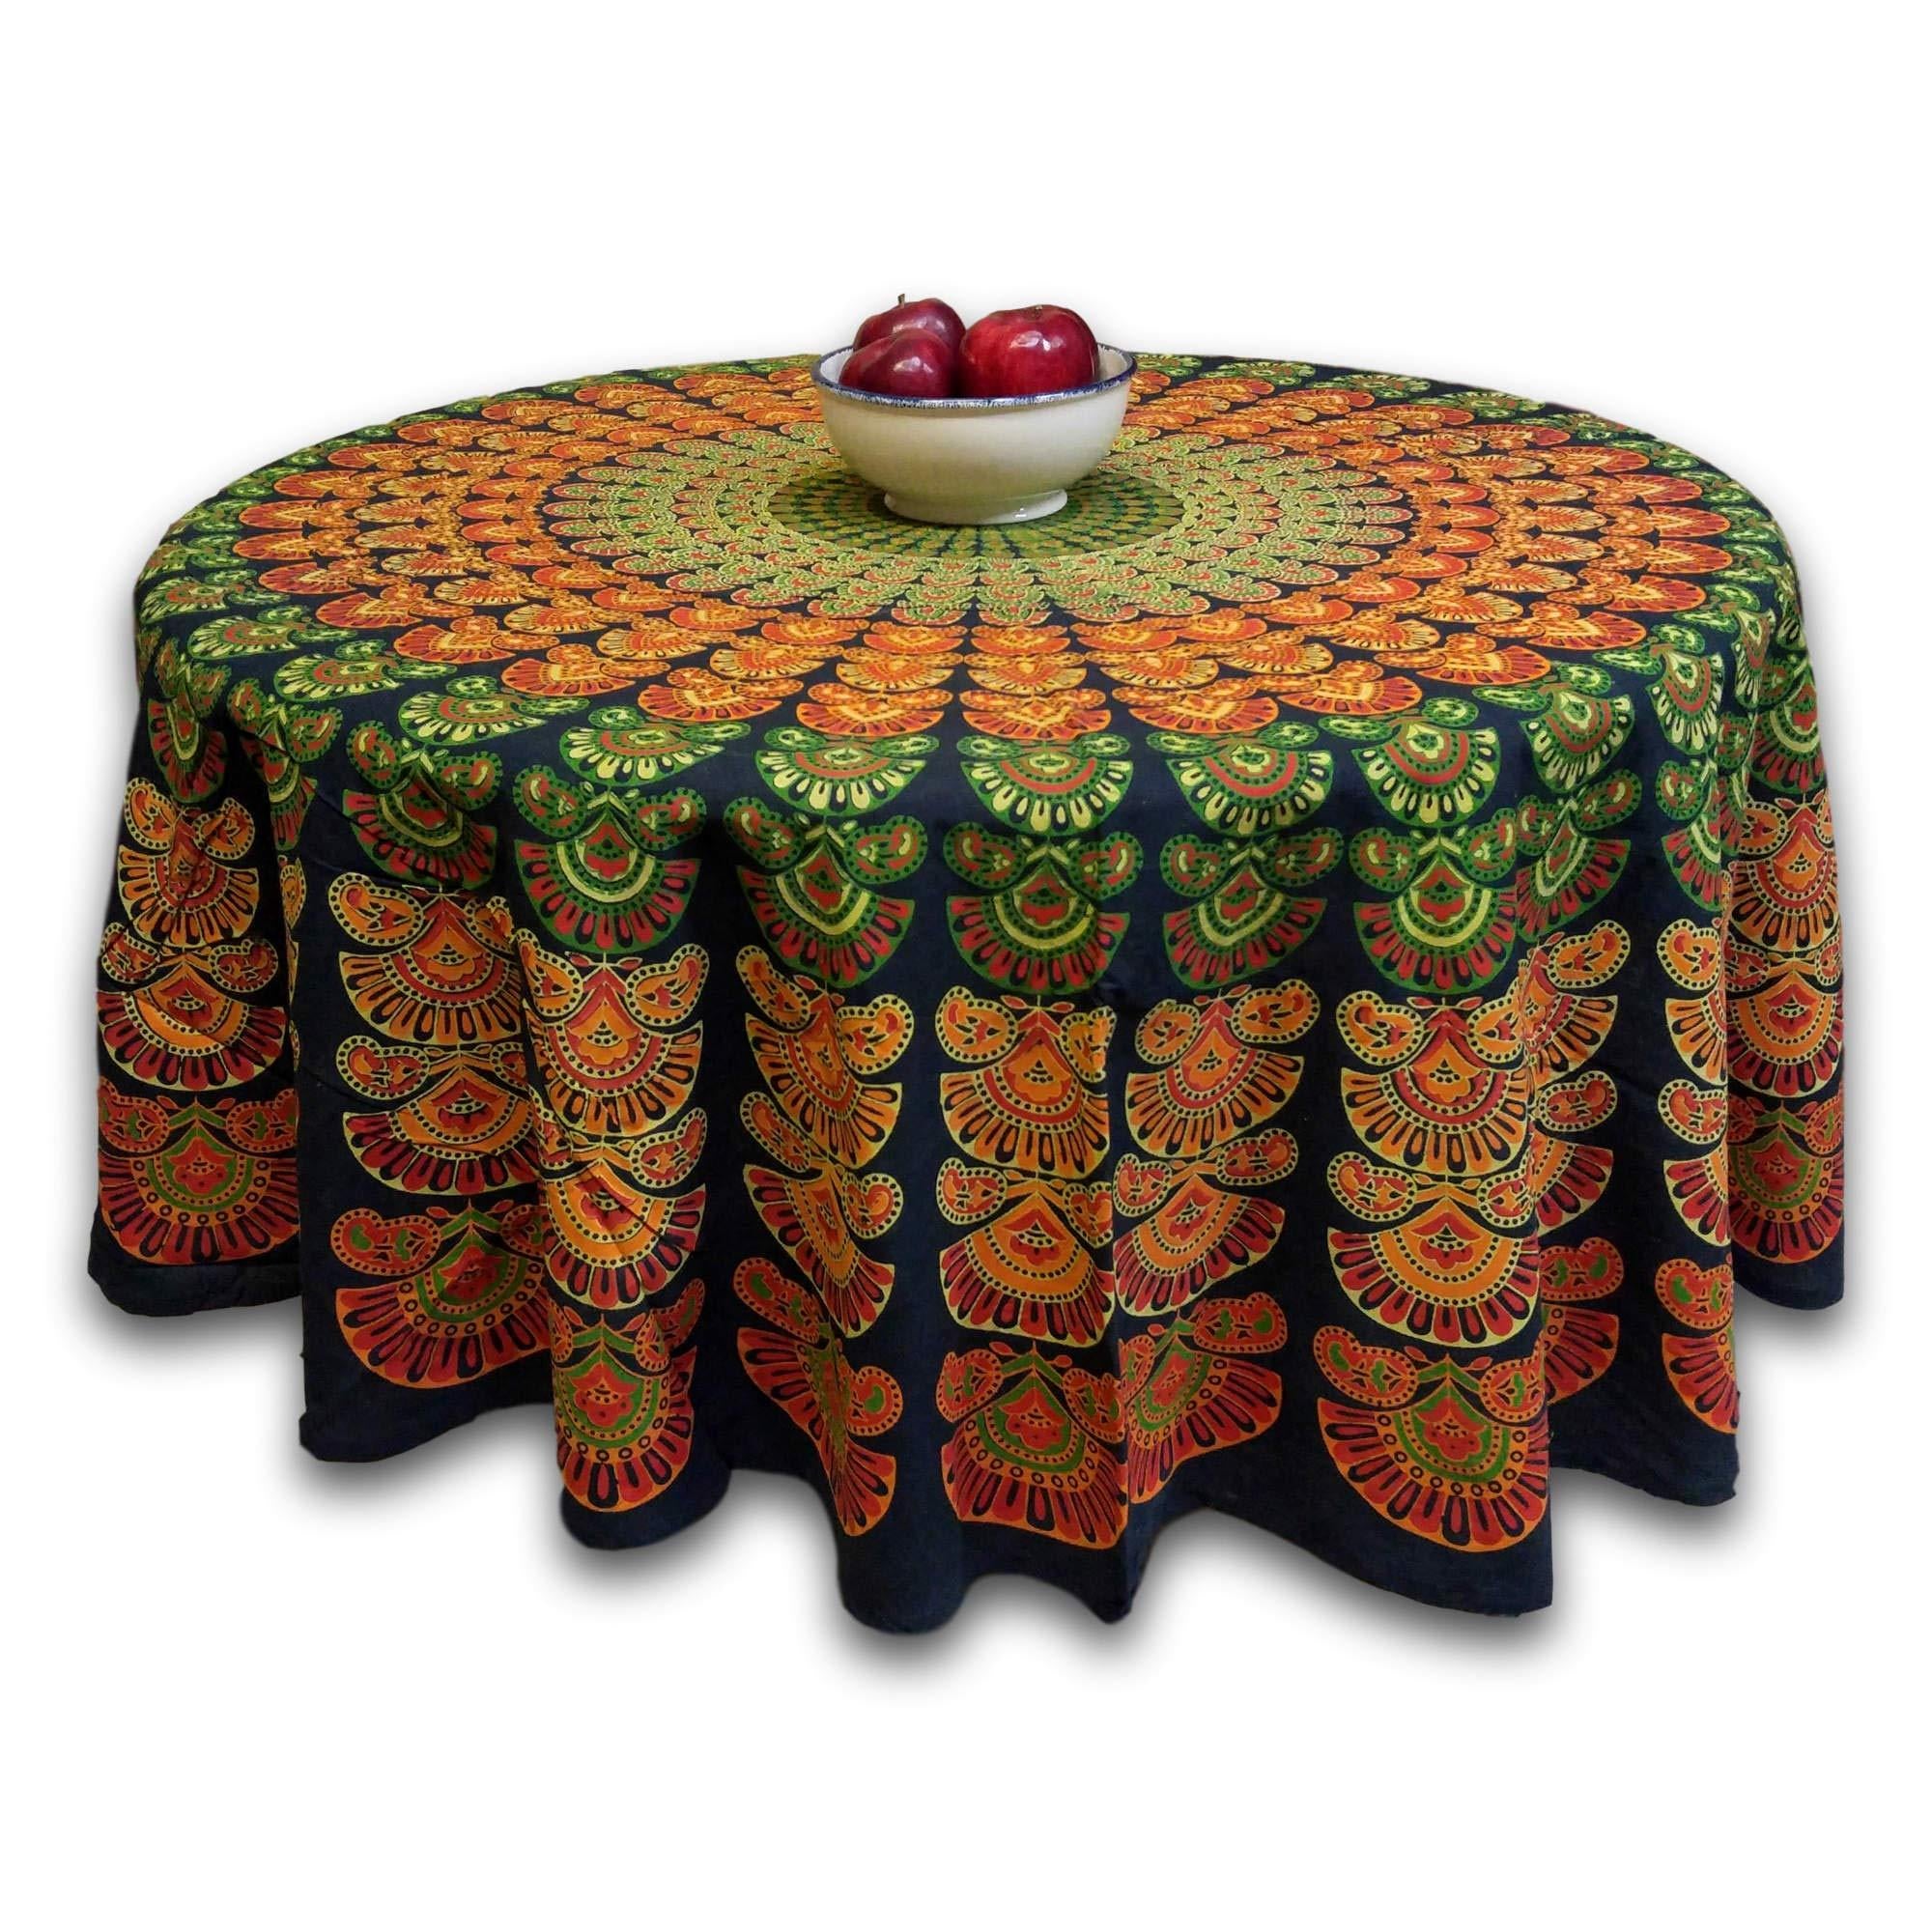 Handmade Cotton Sanganer Peacock Mandala Floral Tablecloth Round 72 Inch Green